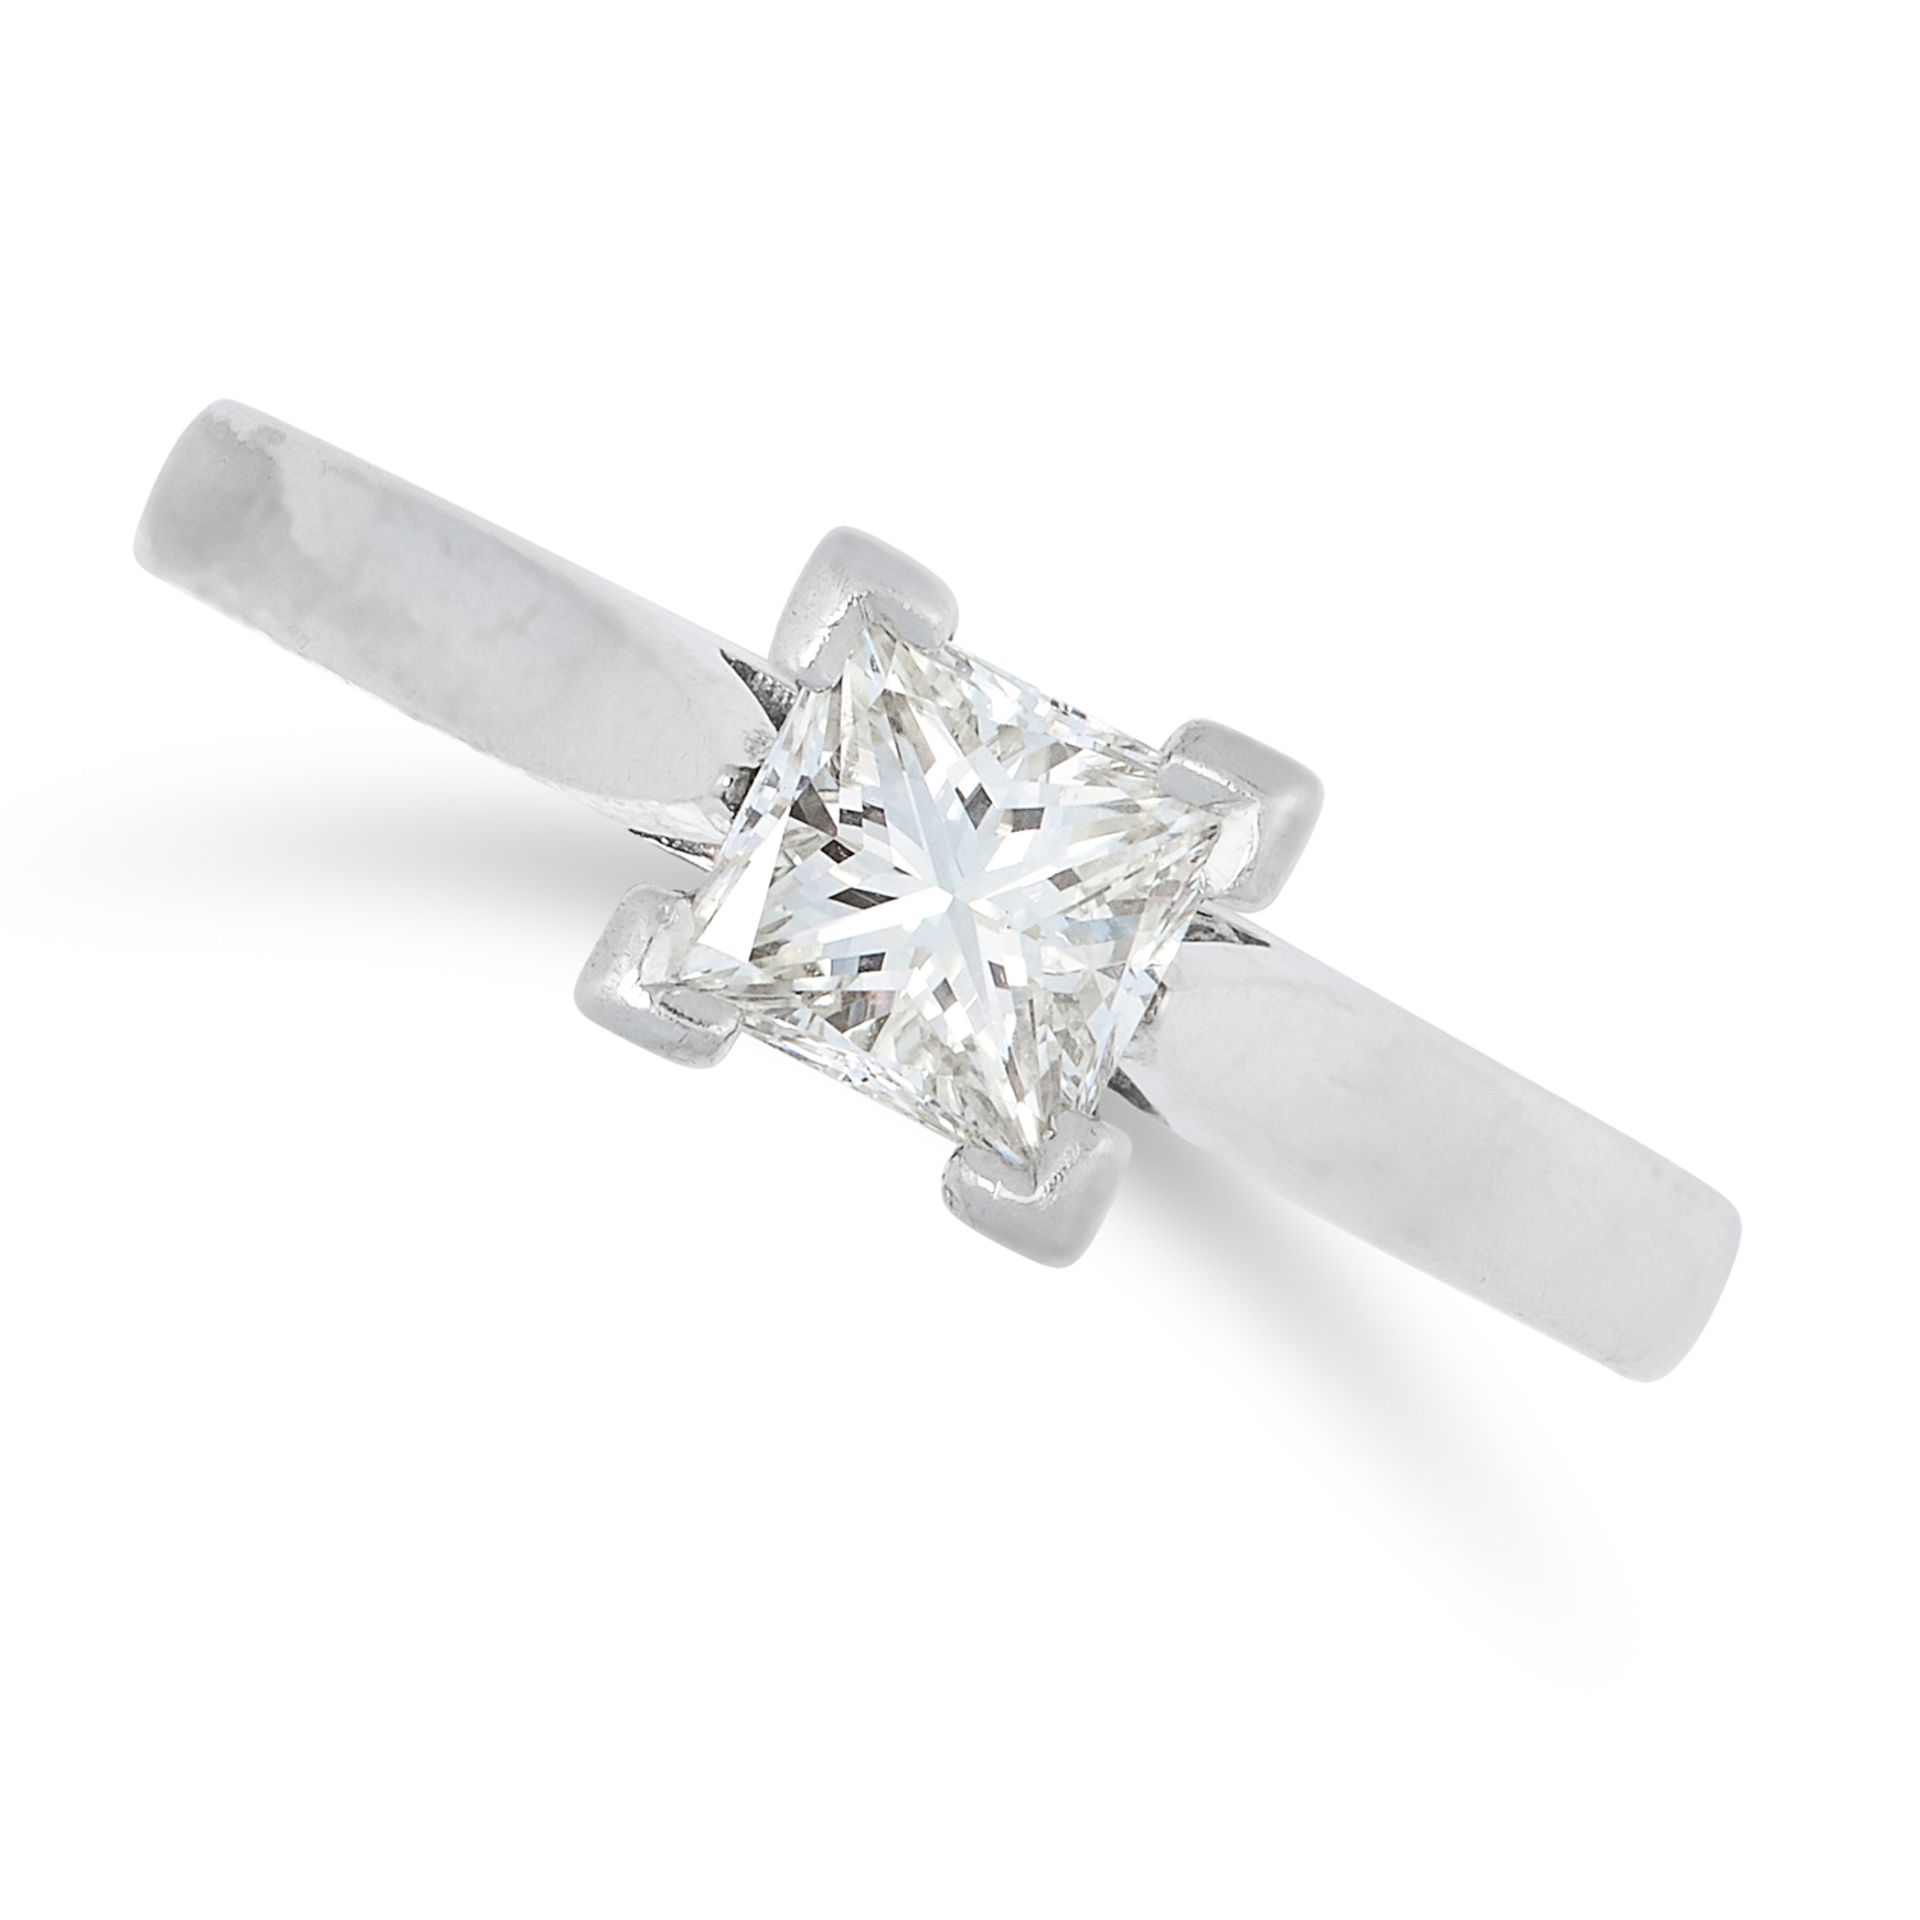 A 0.51 CARAT DIAMOND SOLITAIRE RING in platinum, set with a princess cut diamond of 0.51 carats,